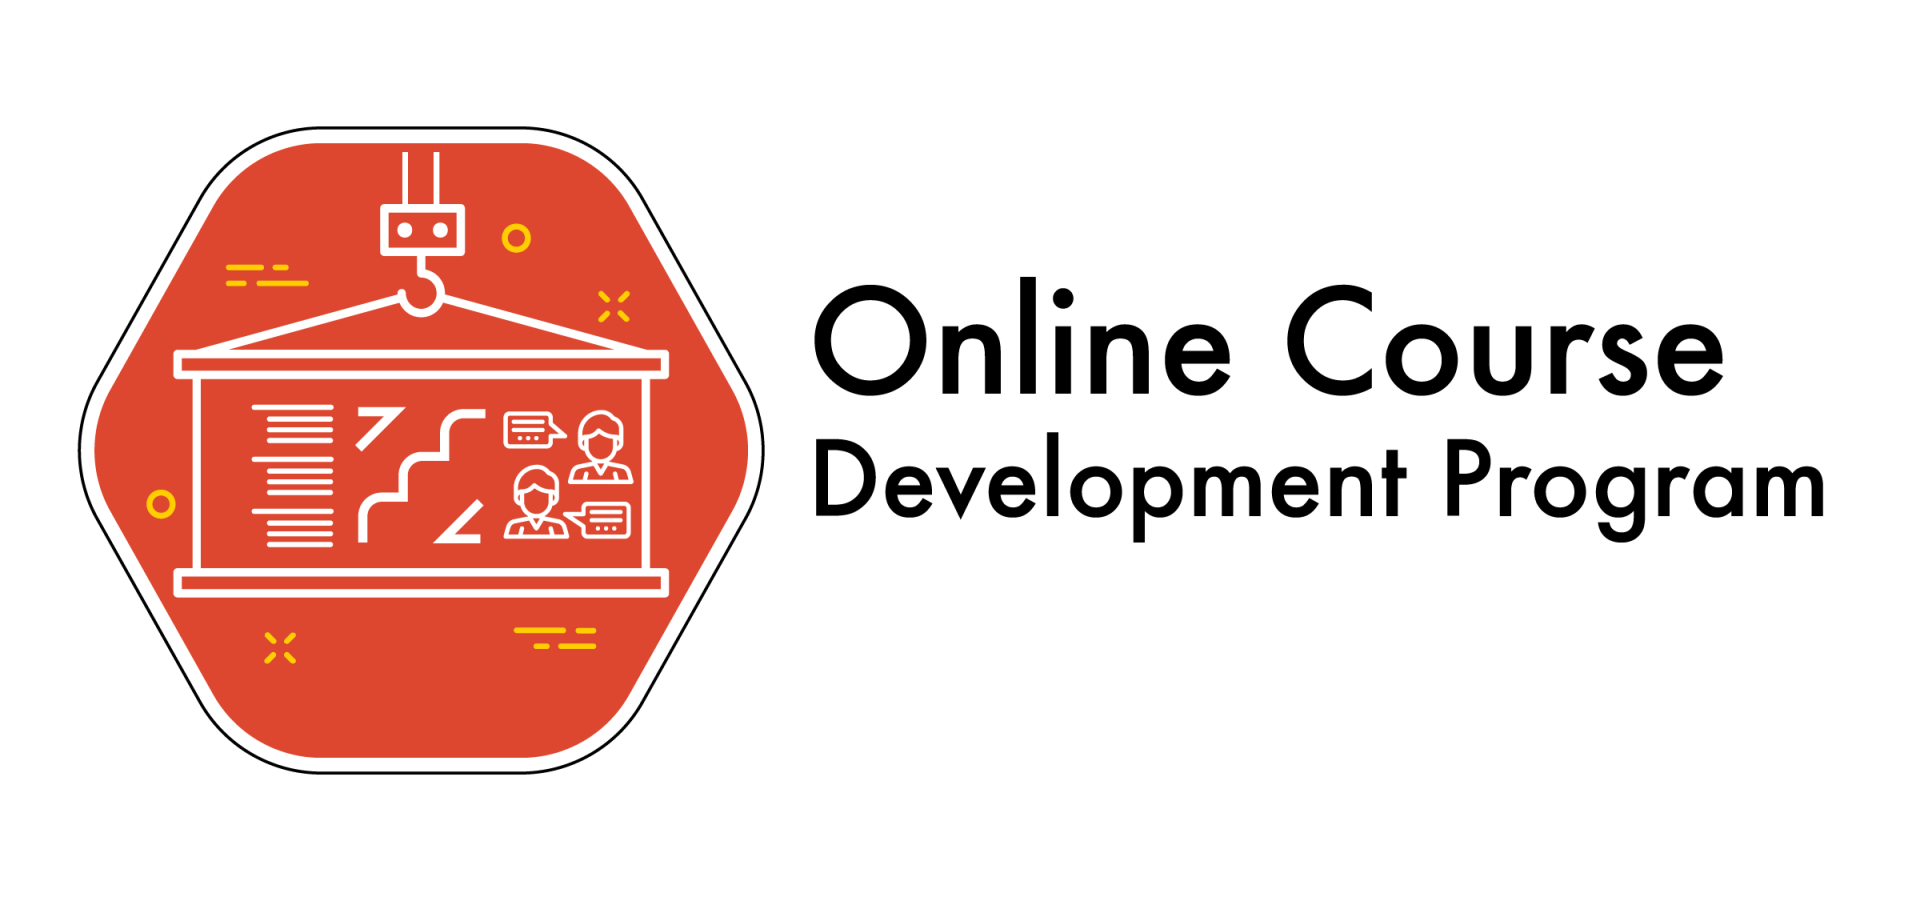 Online Course Development Program